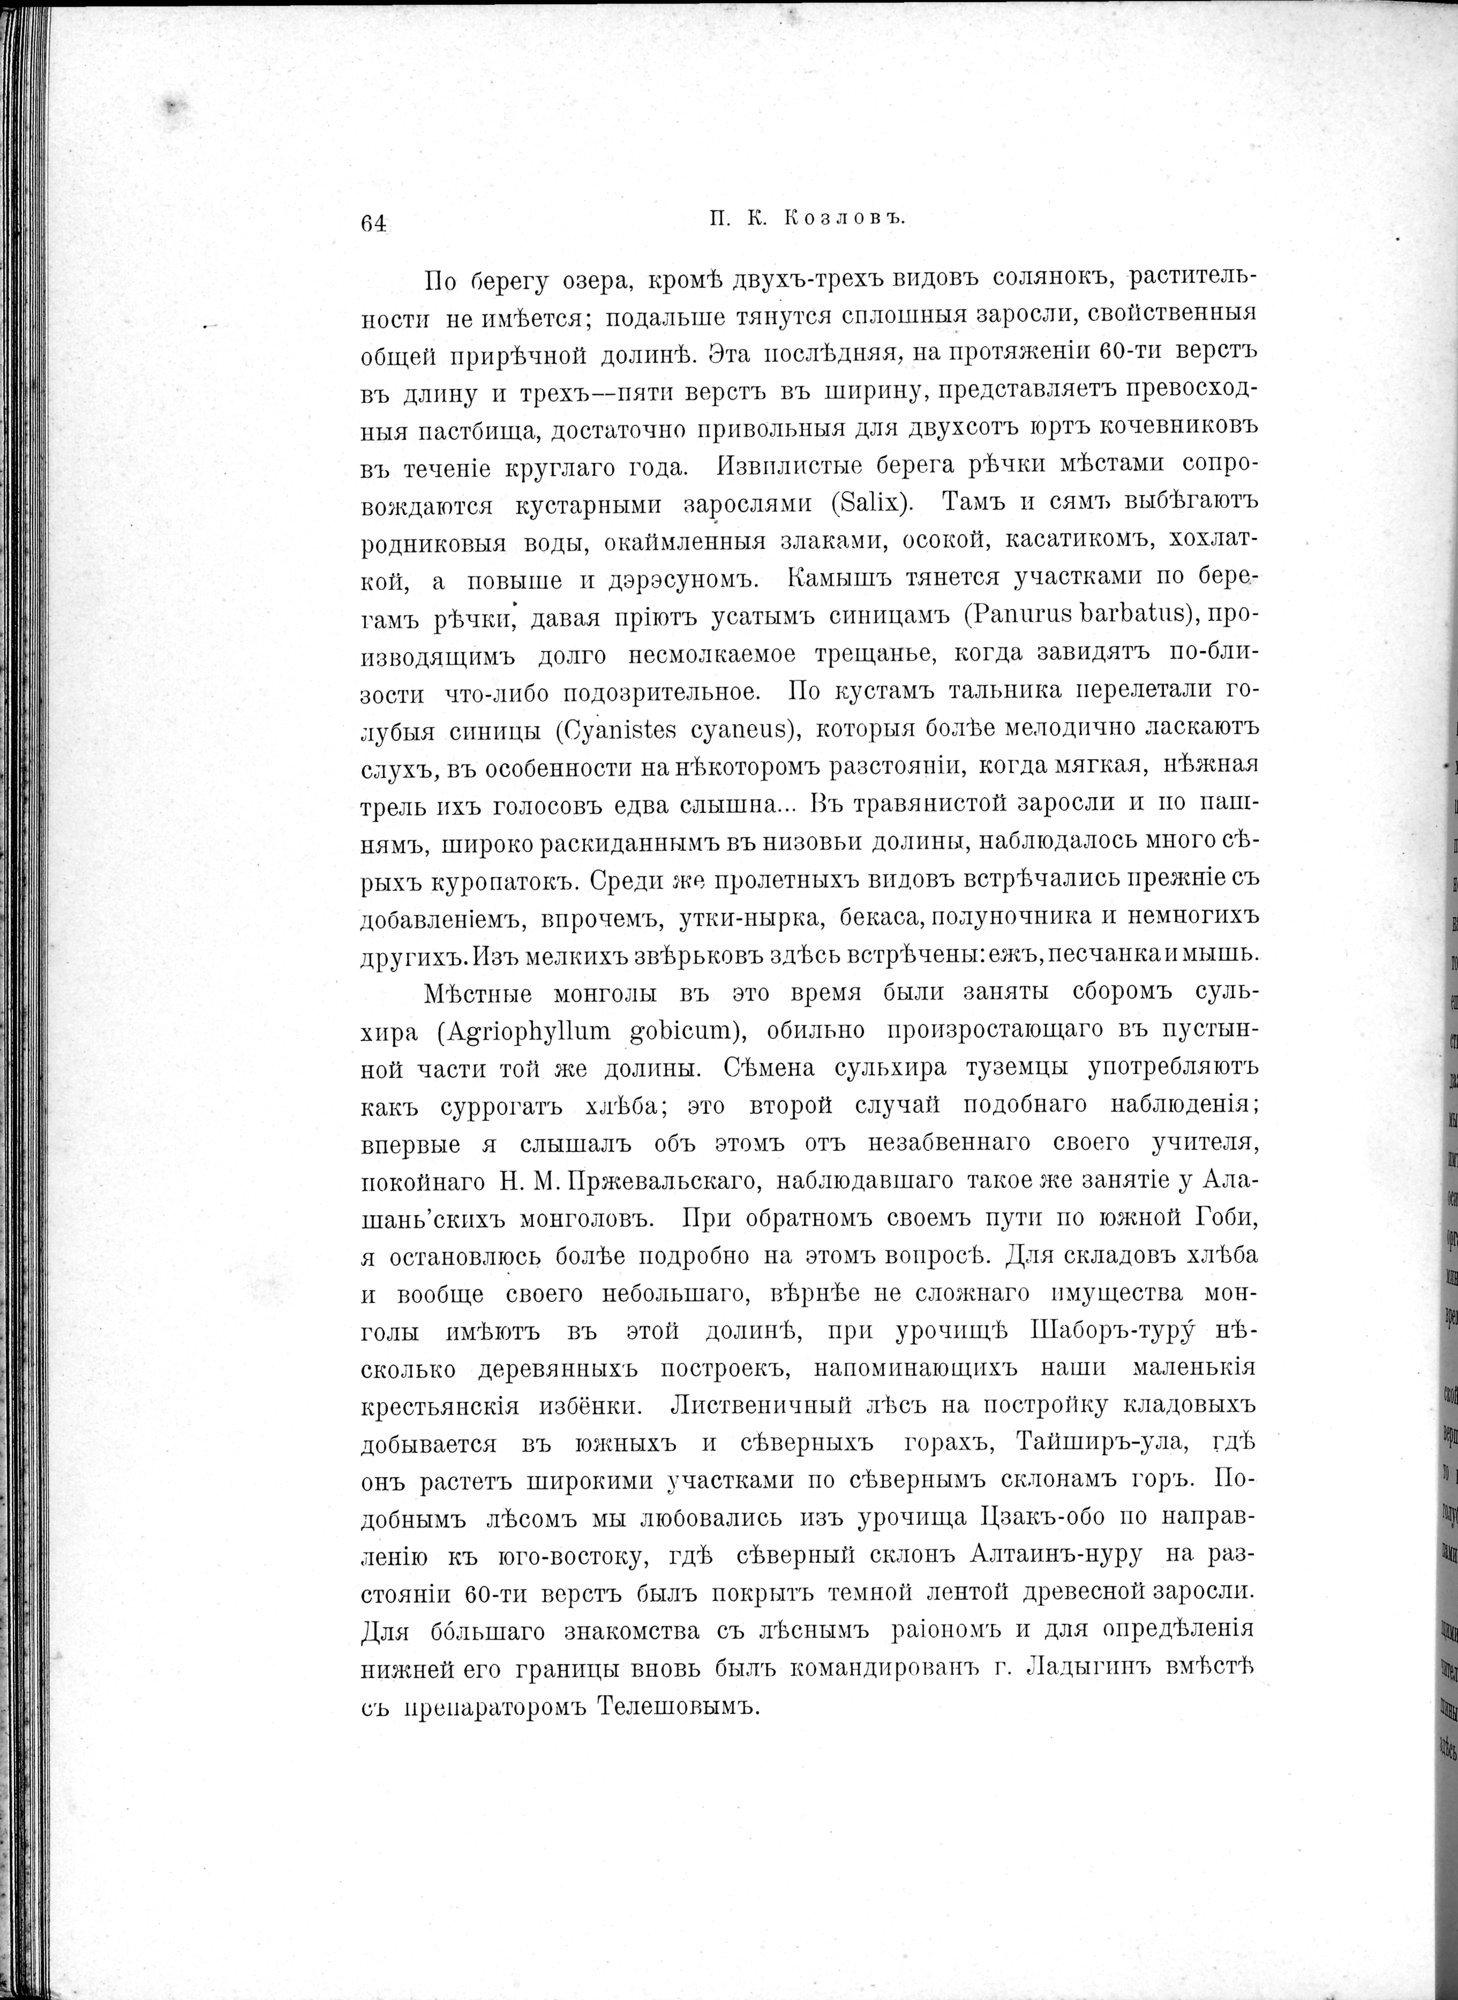 Mongoliia i Kam : vol.1 / Page 98 (Grayscale High Resolution Image)